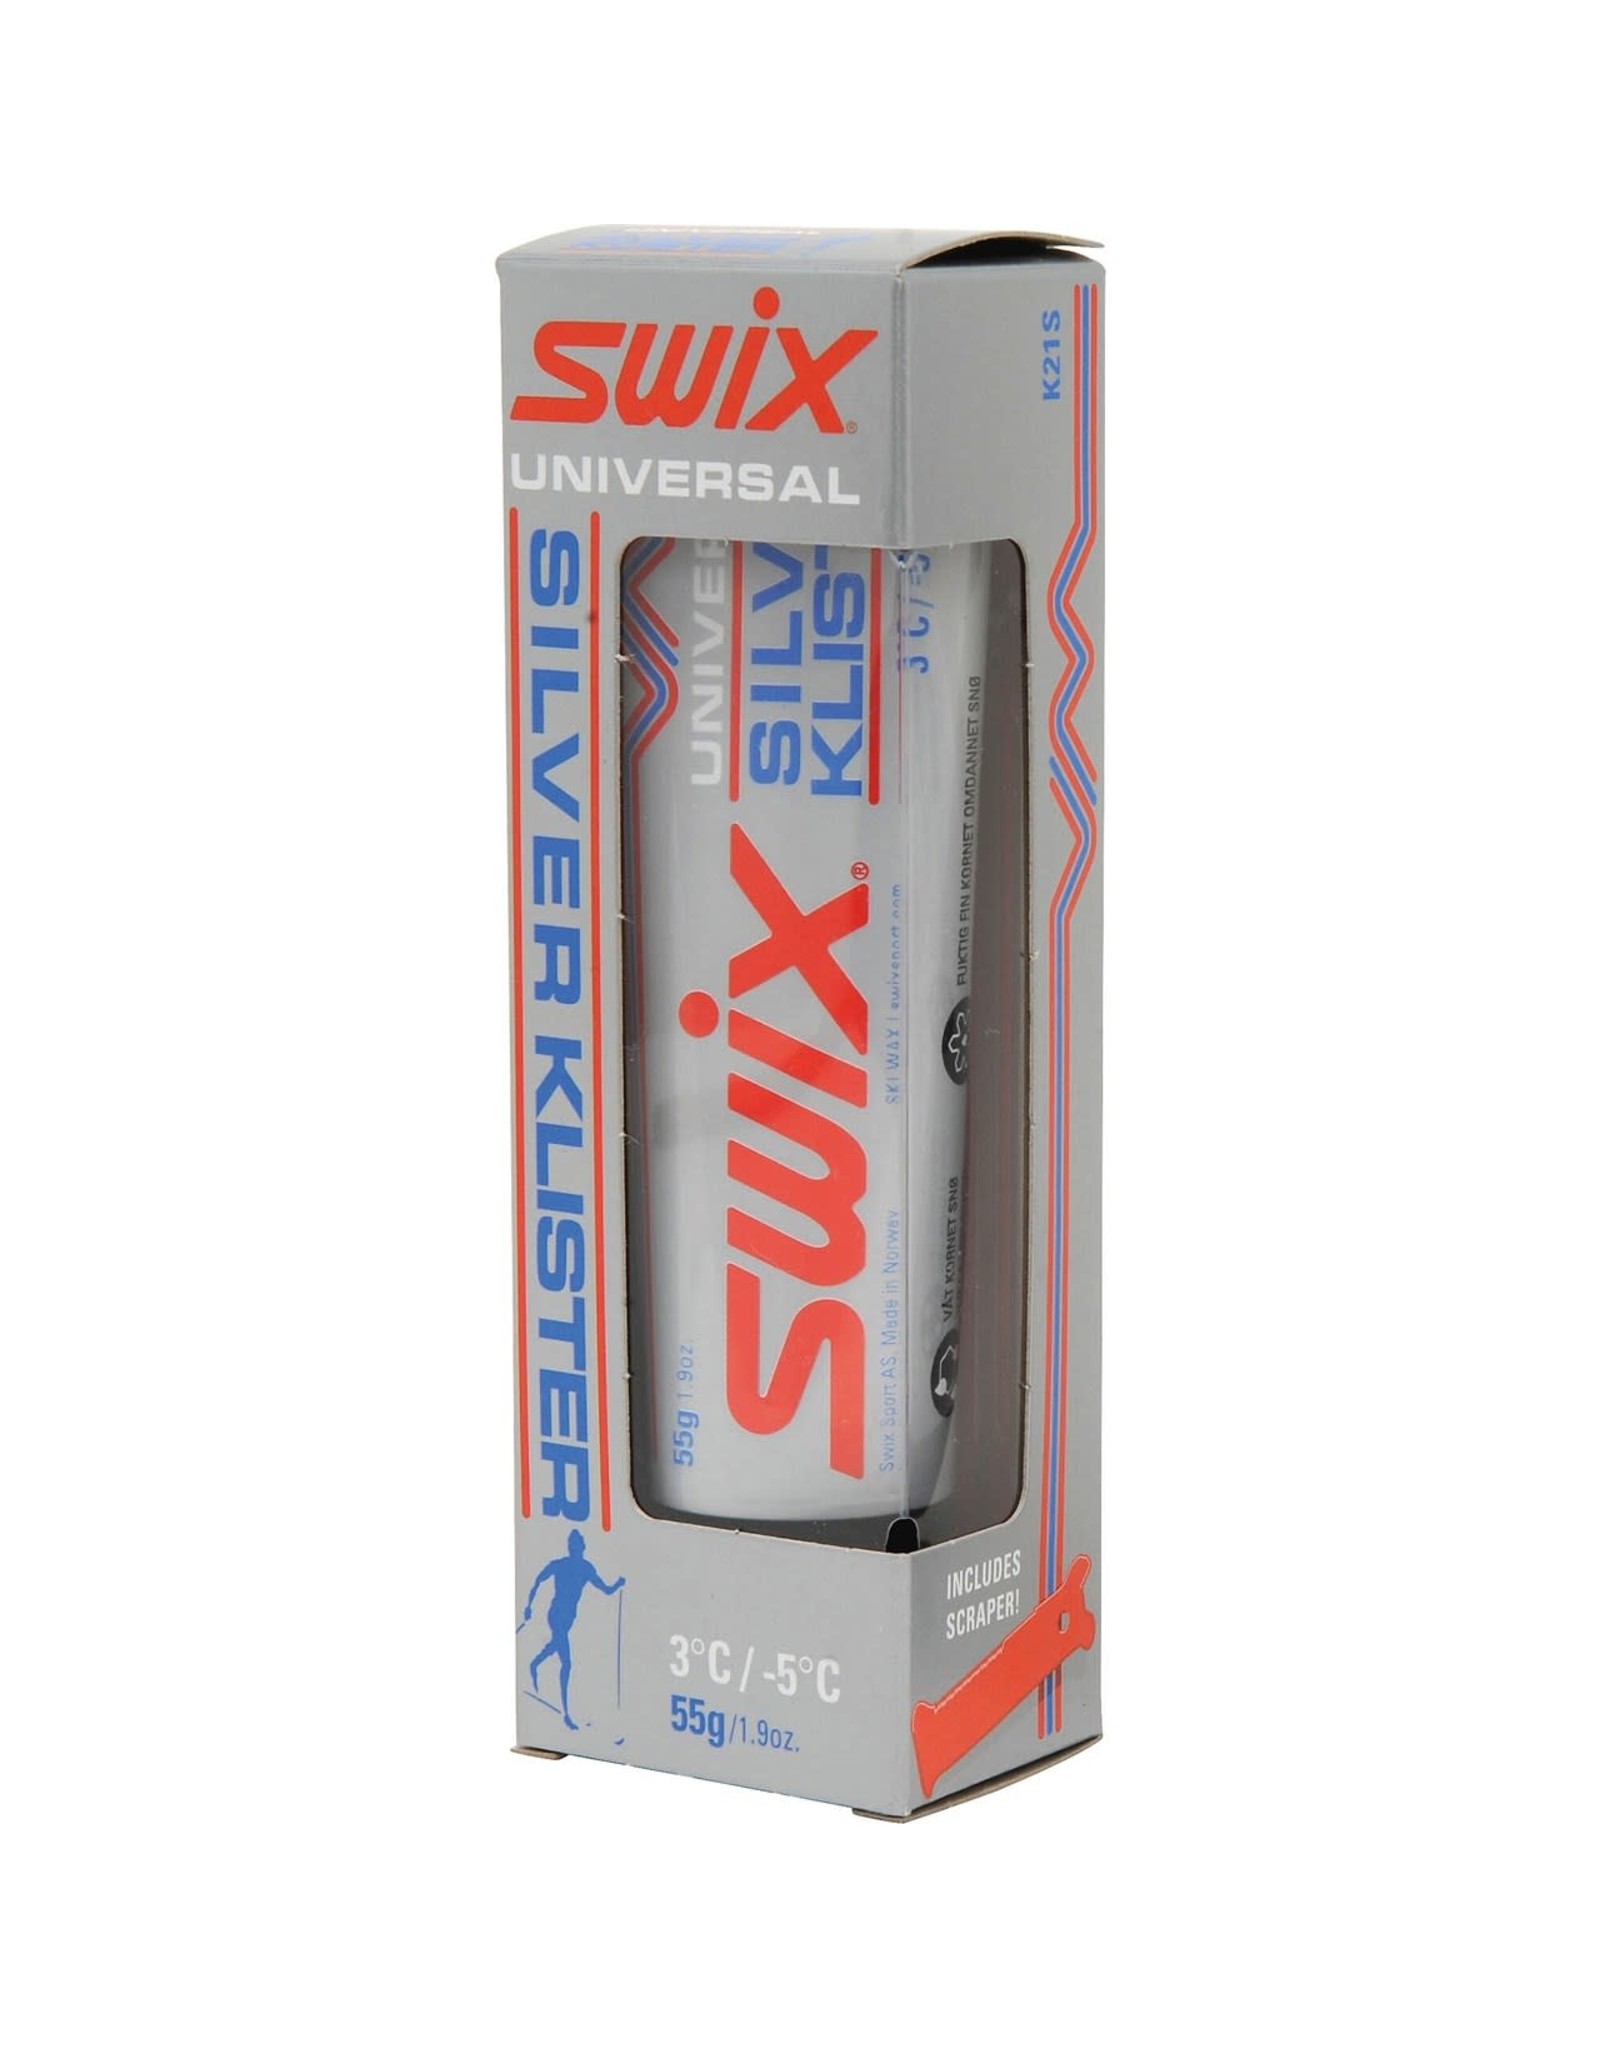 Swix Swix K21S Universal Silver Klister